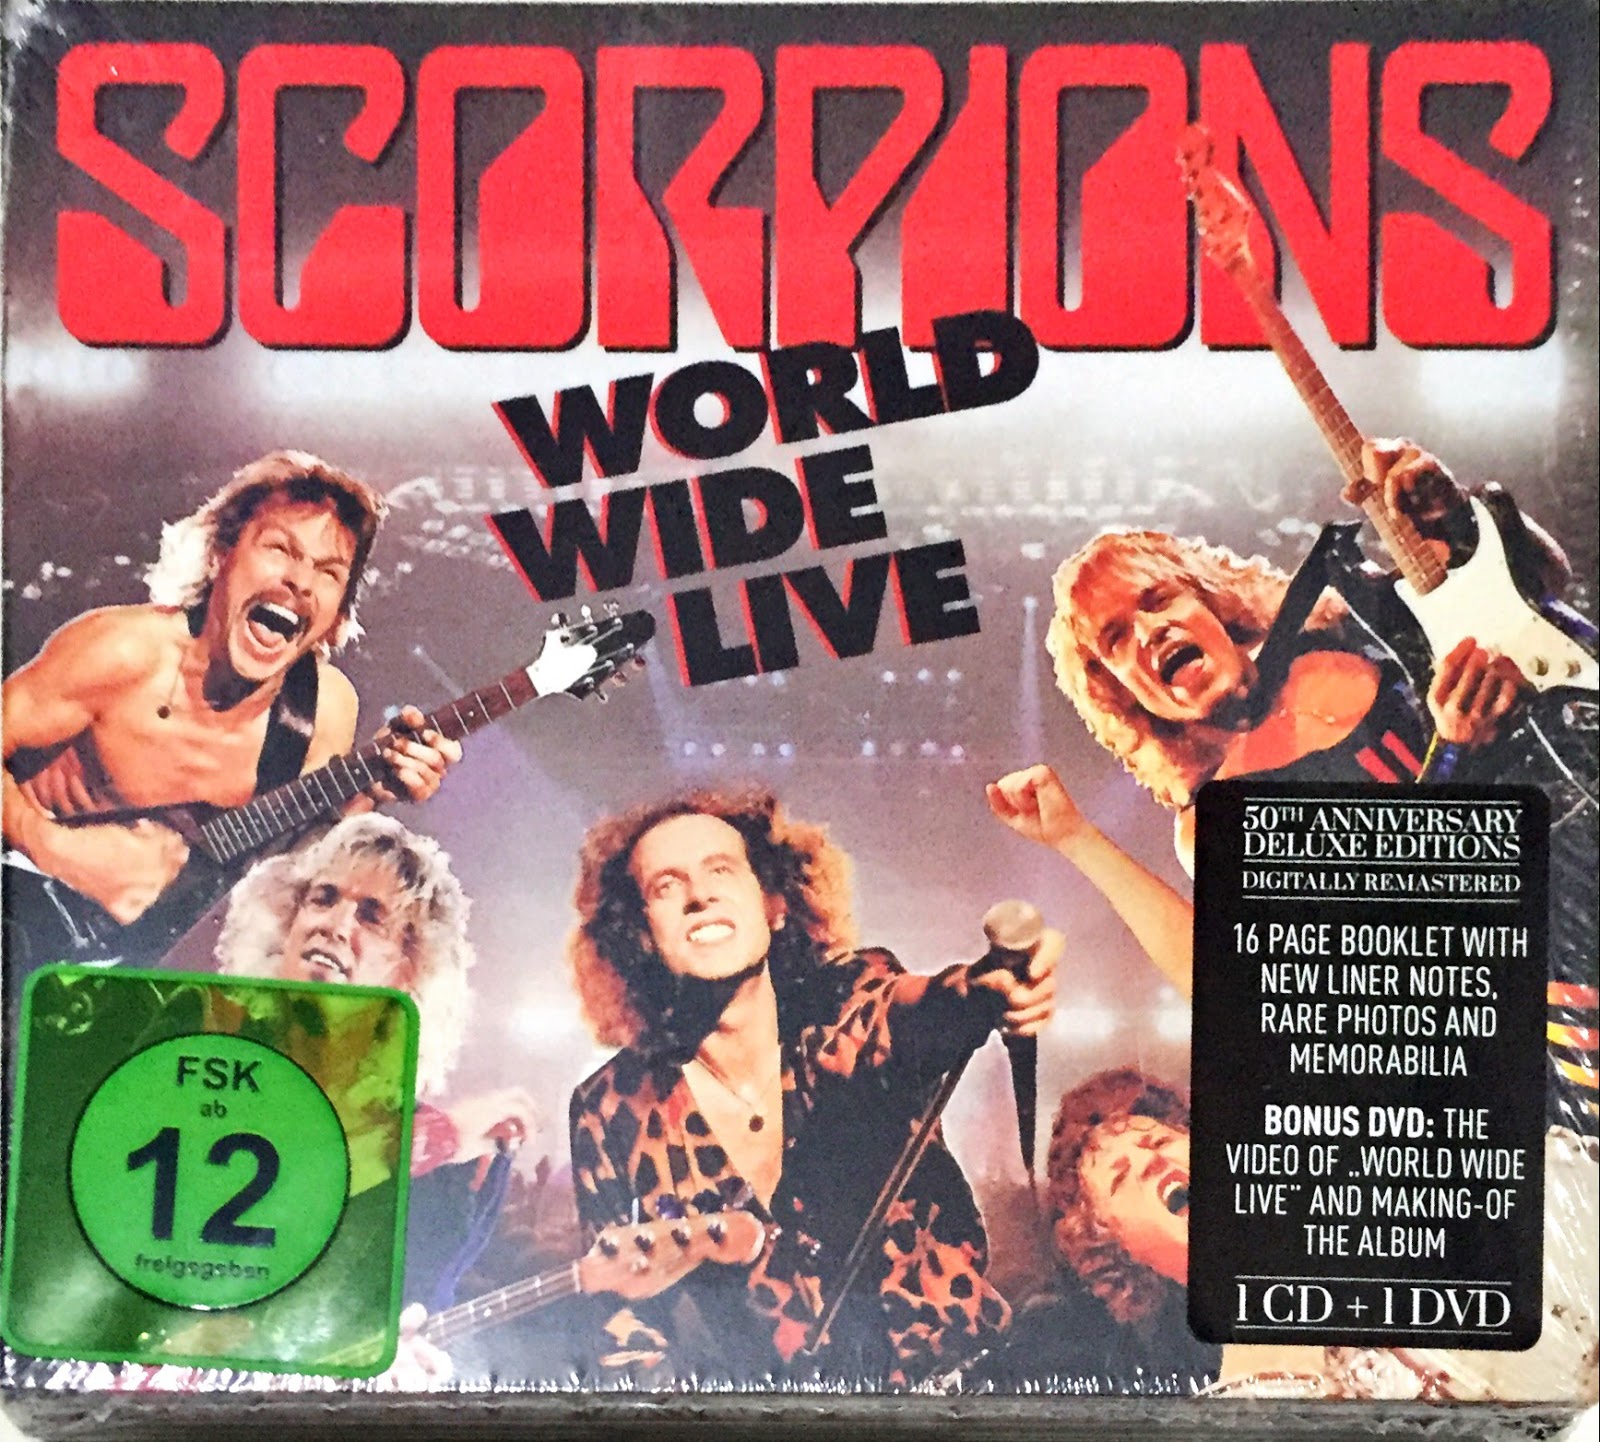 Scorpions world. Scorpions World wide Live 1985. Scorpions 1985 World wide Live обложка альбома. Scorpions DVD концерты. Scorpions - - Deluxe Edition.